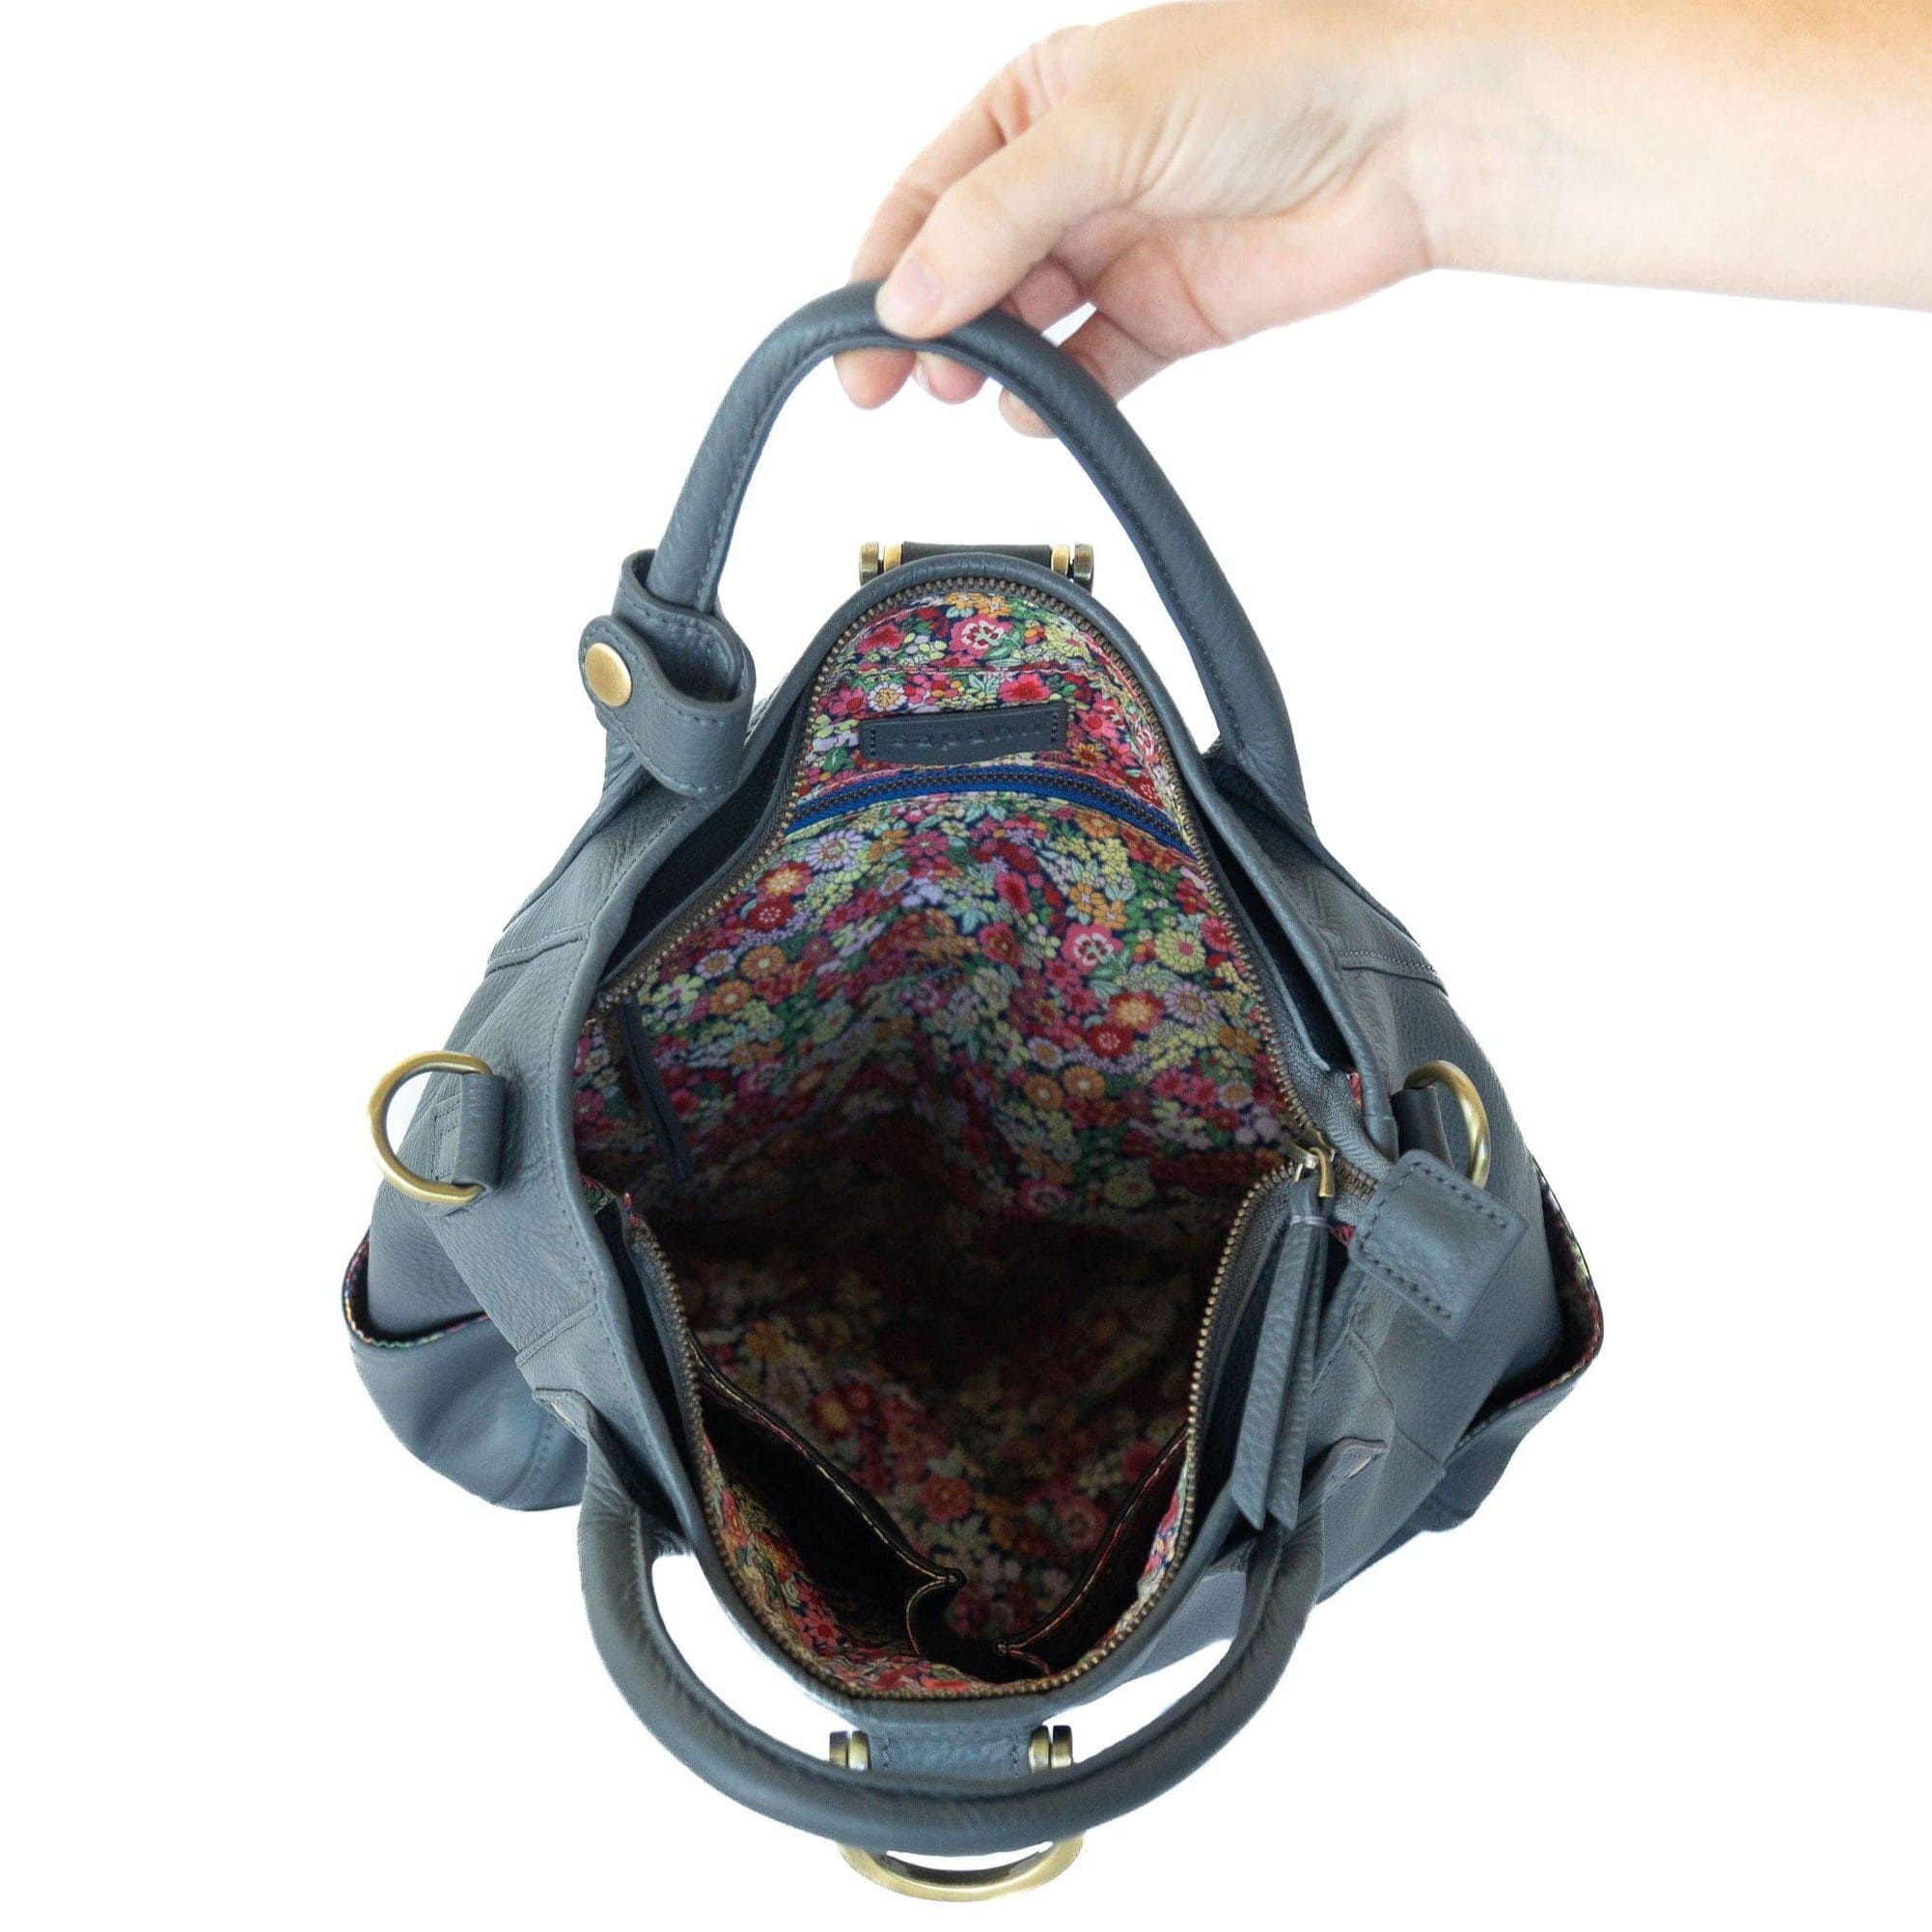 Chloe Convertible Backpack and Crossbody Bag